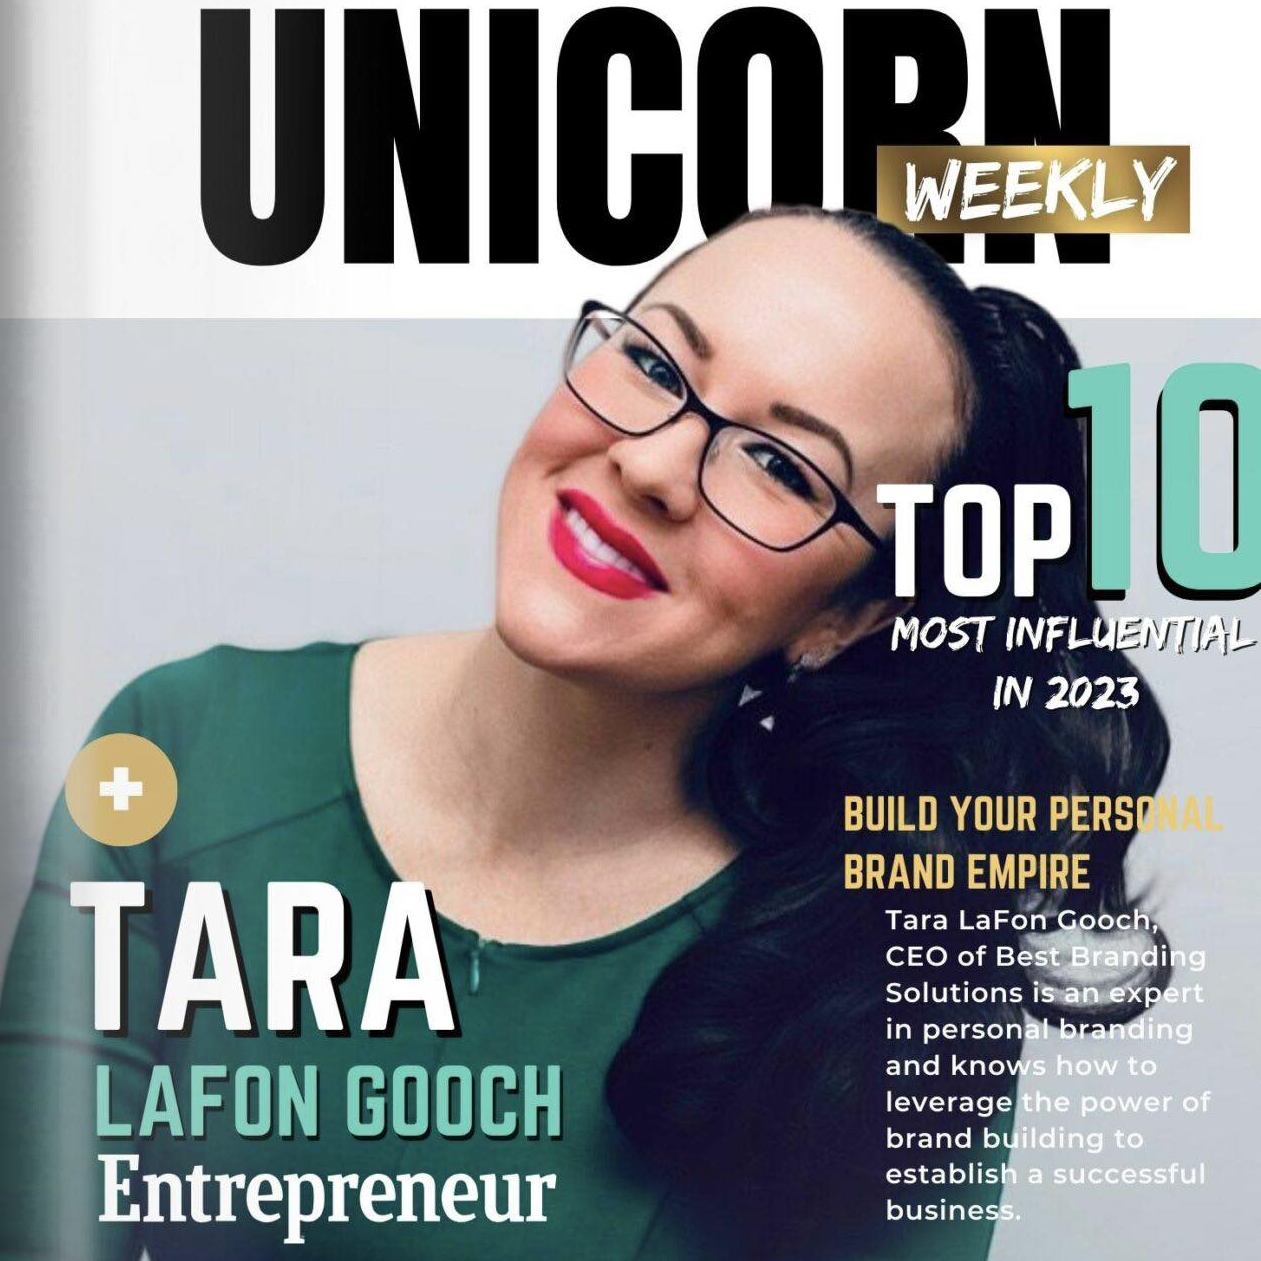 Cover story featuring Tara LaFon Gooch